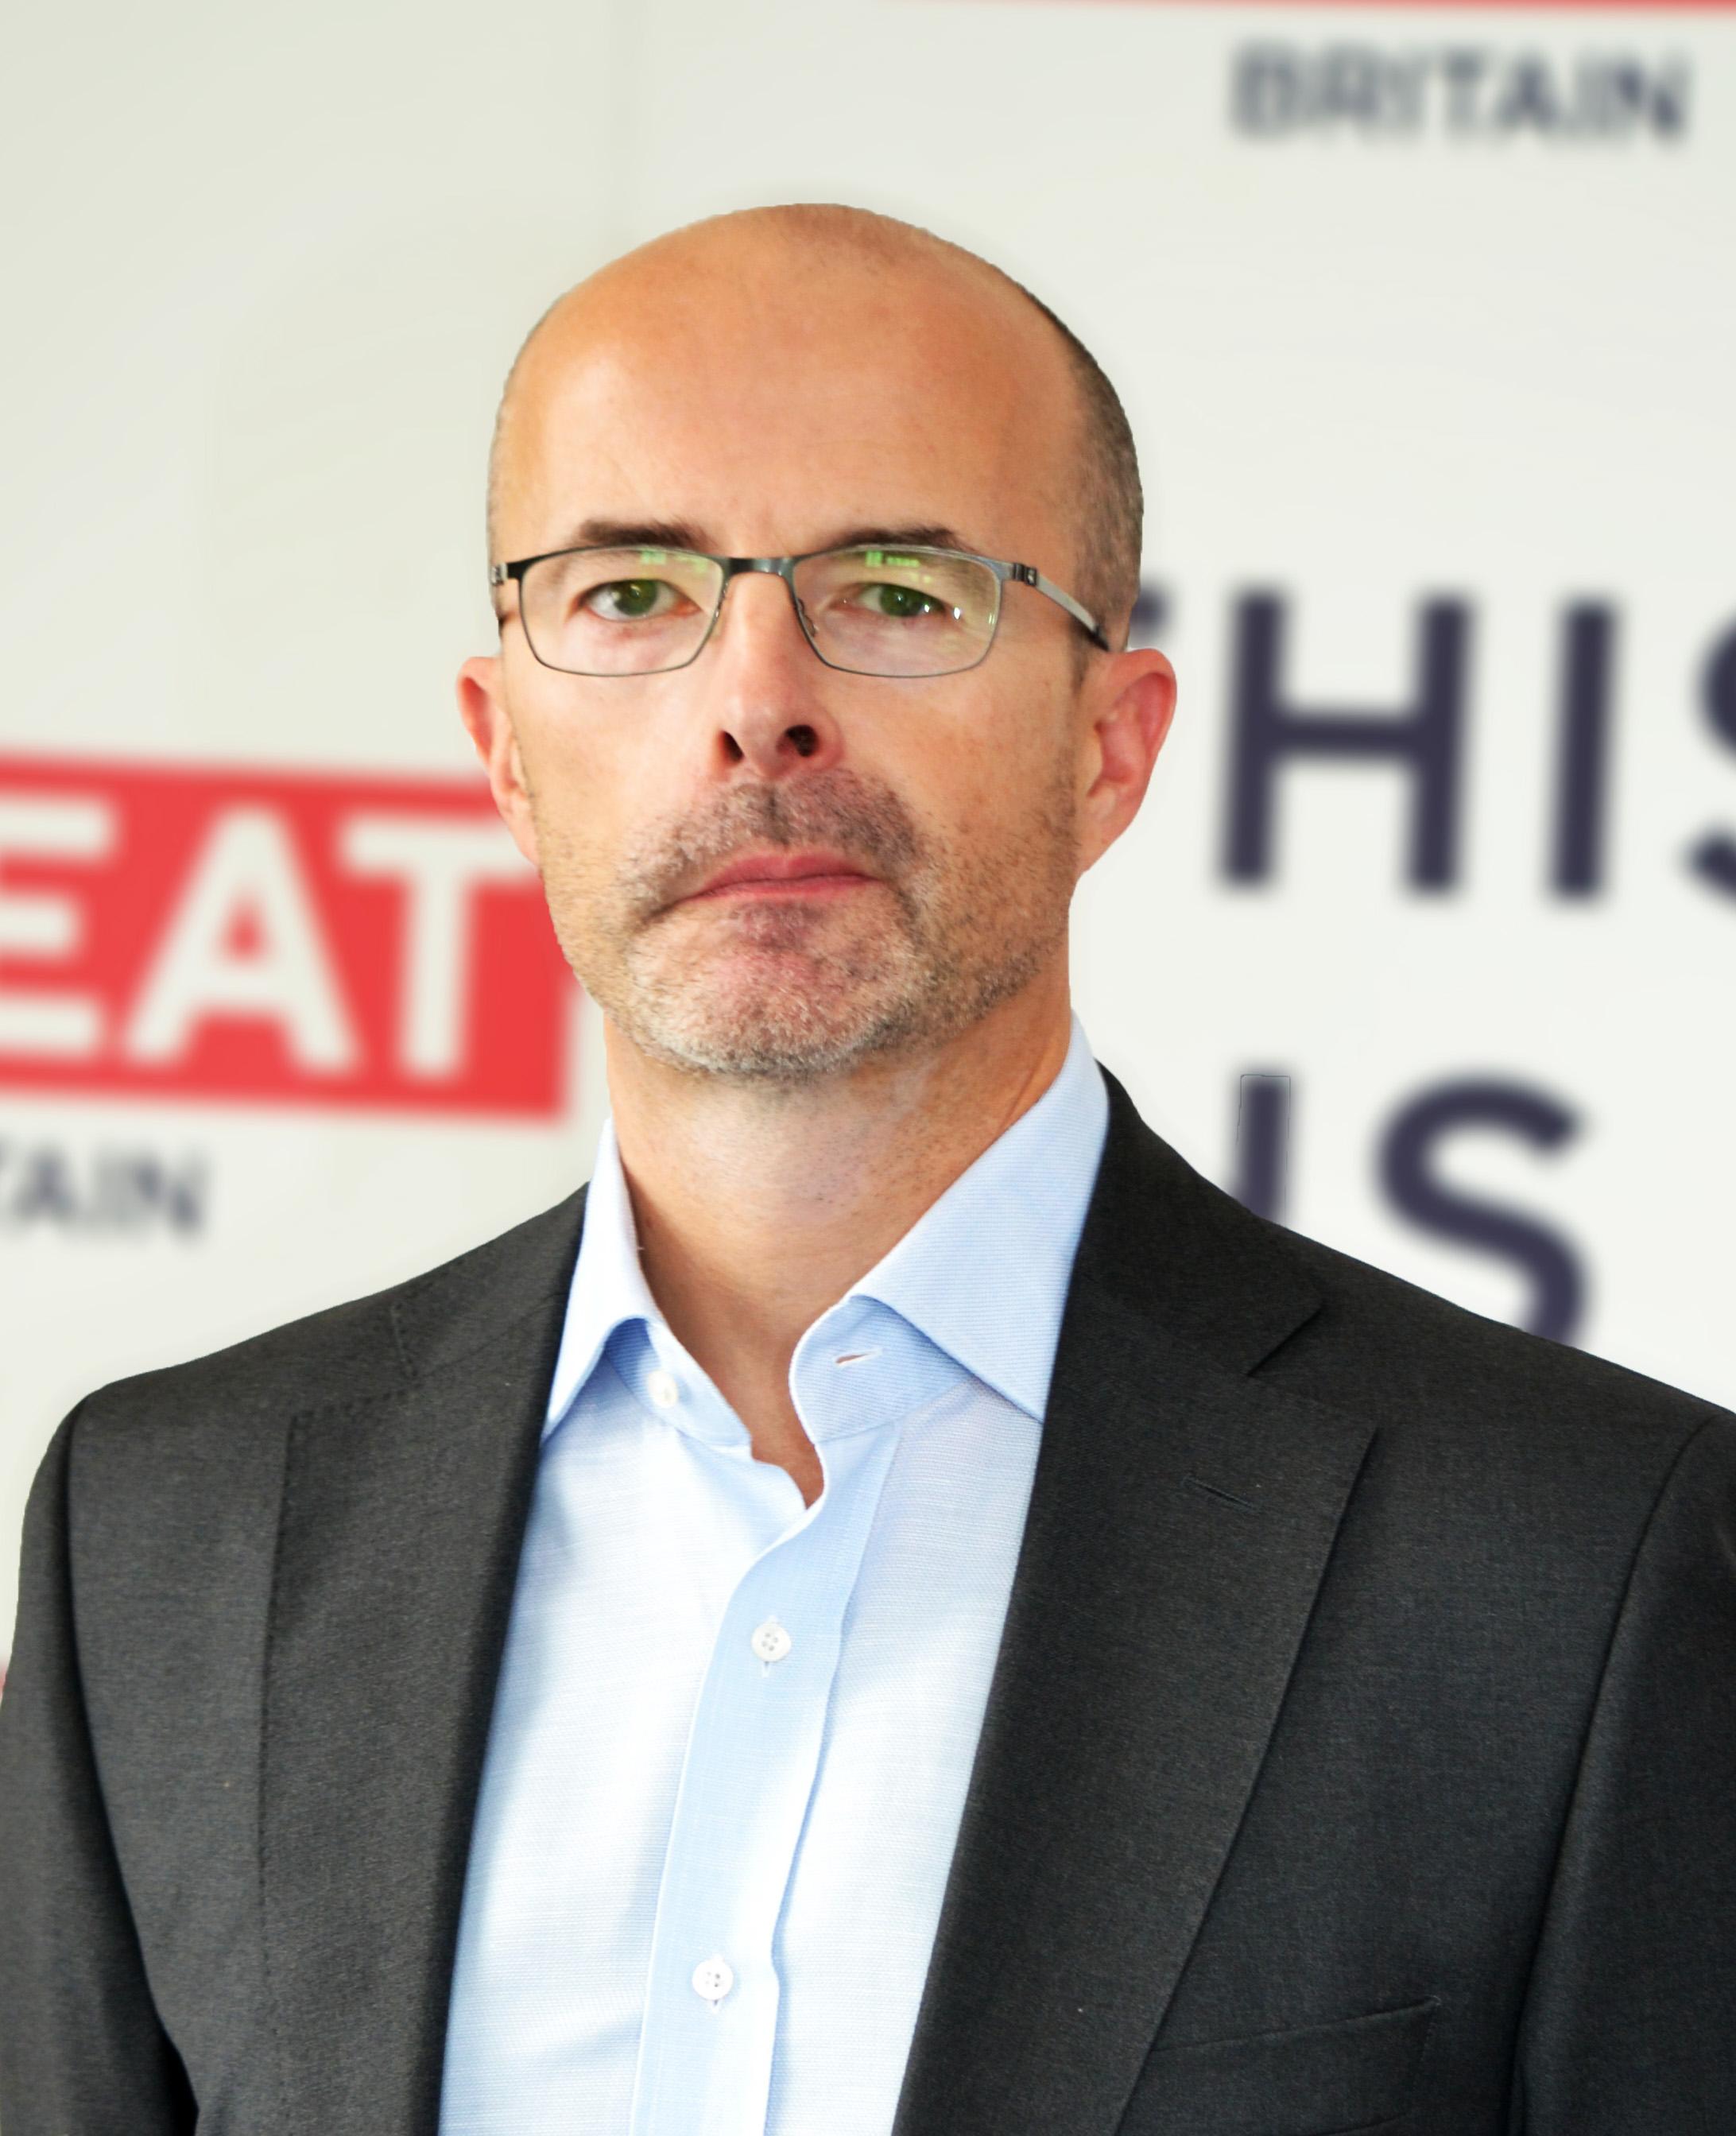 Interview 2: HMA Jonathan Knott, Former British Ambassador To Hungary